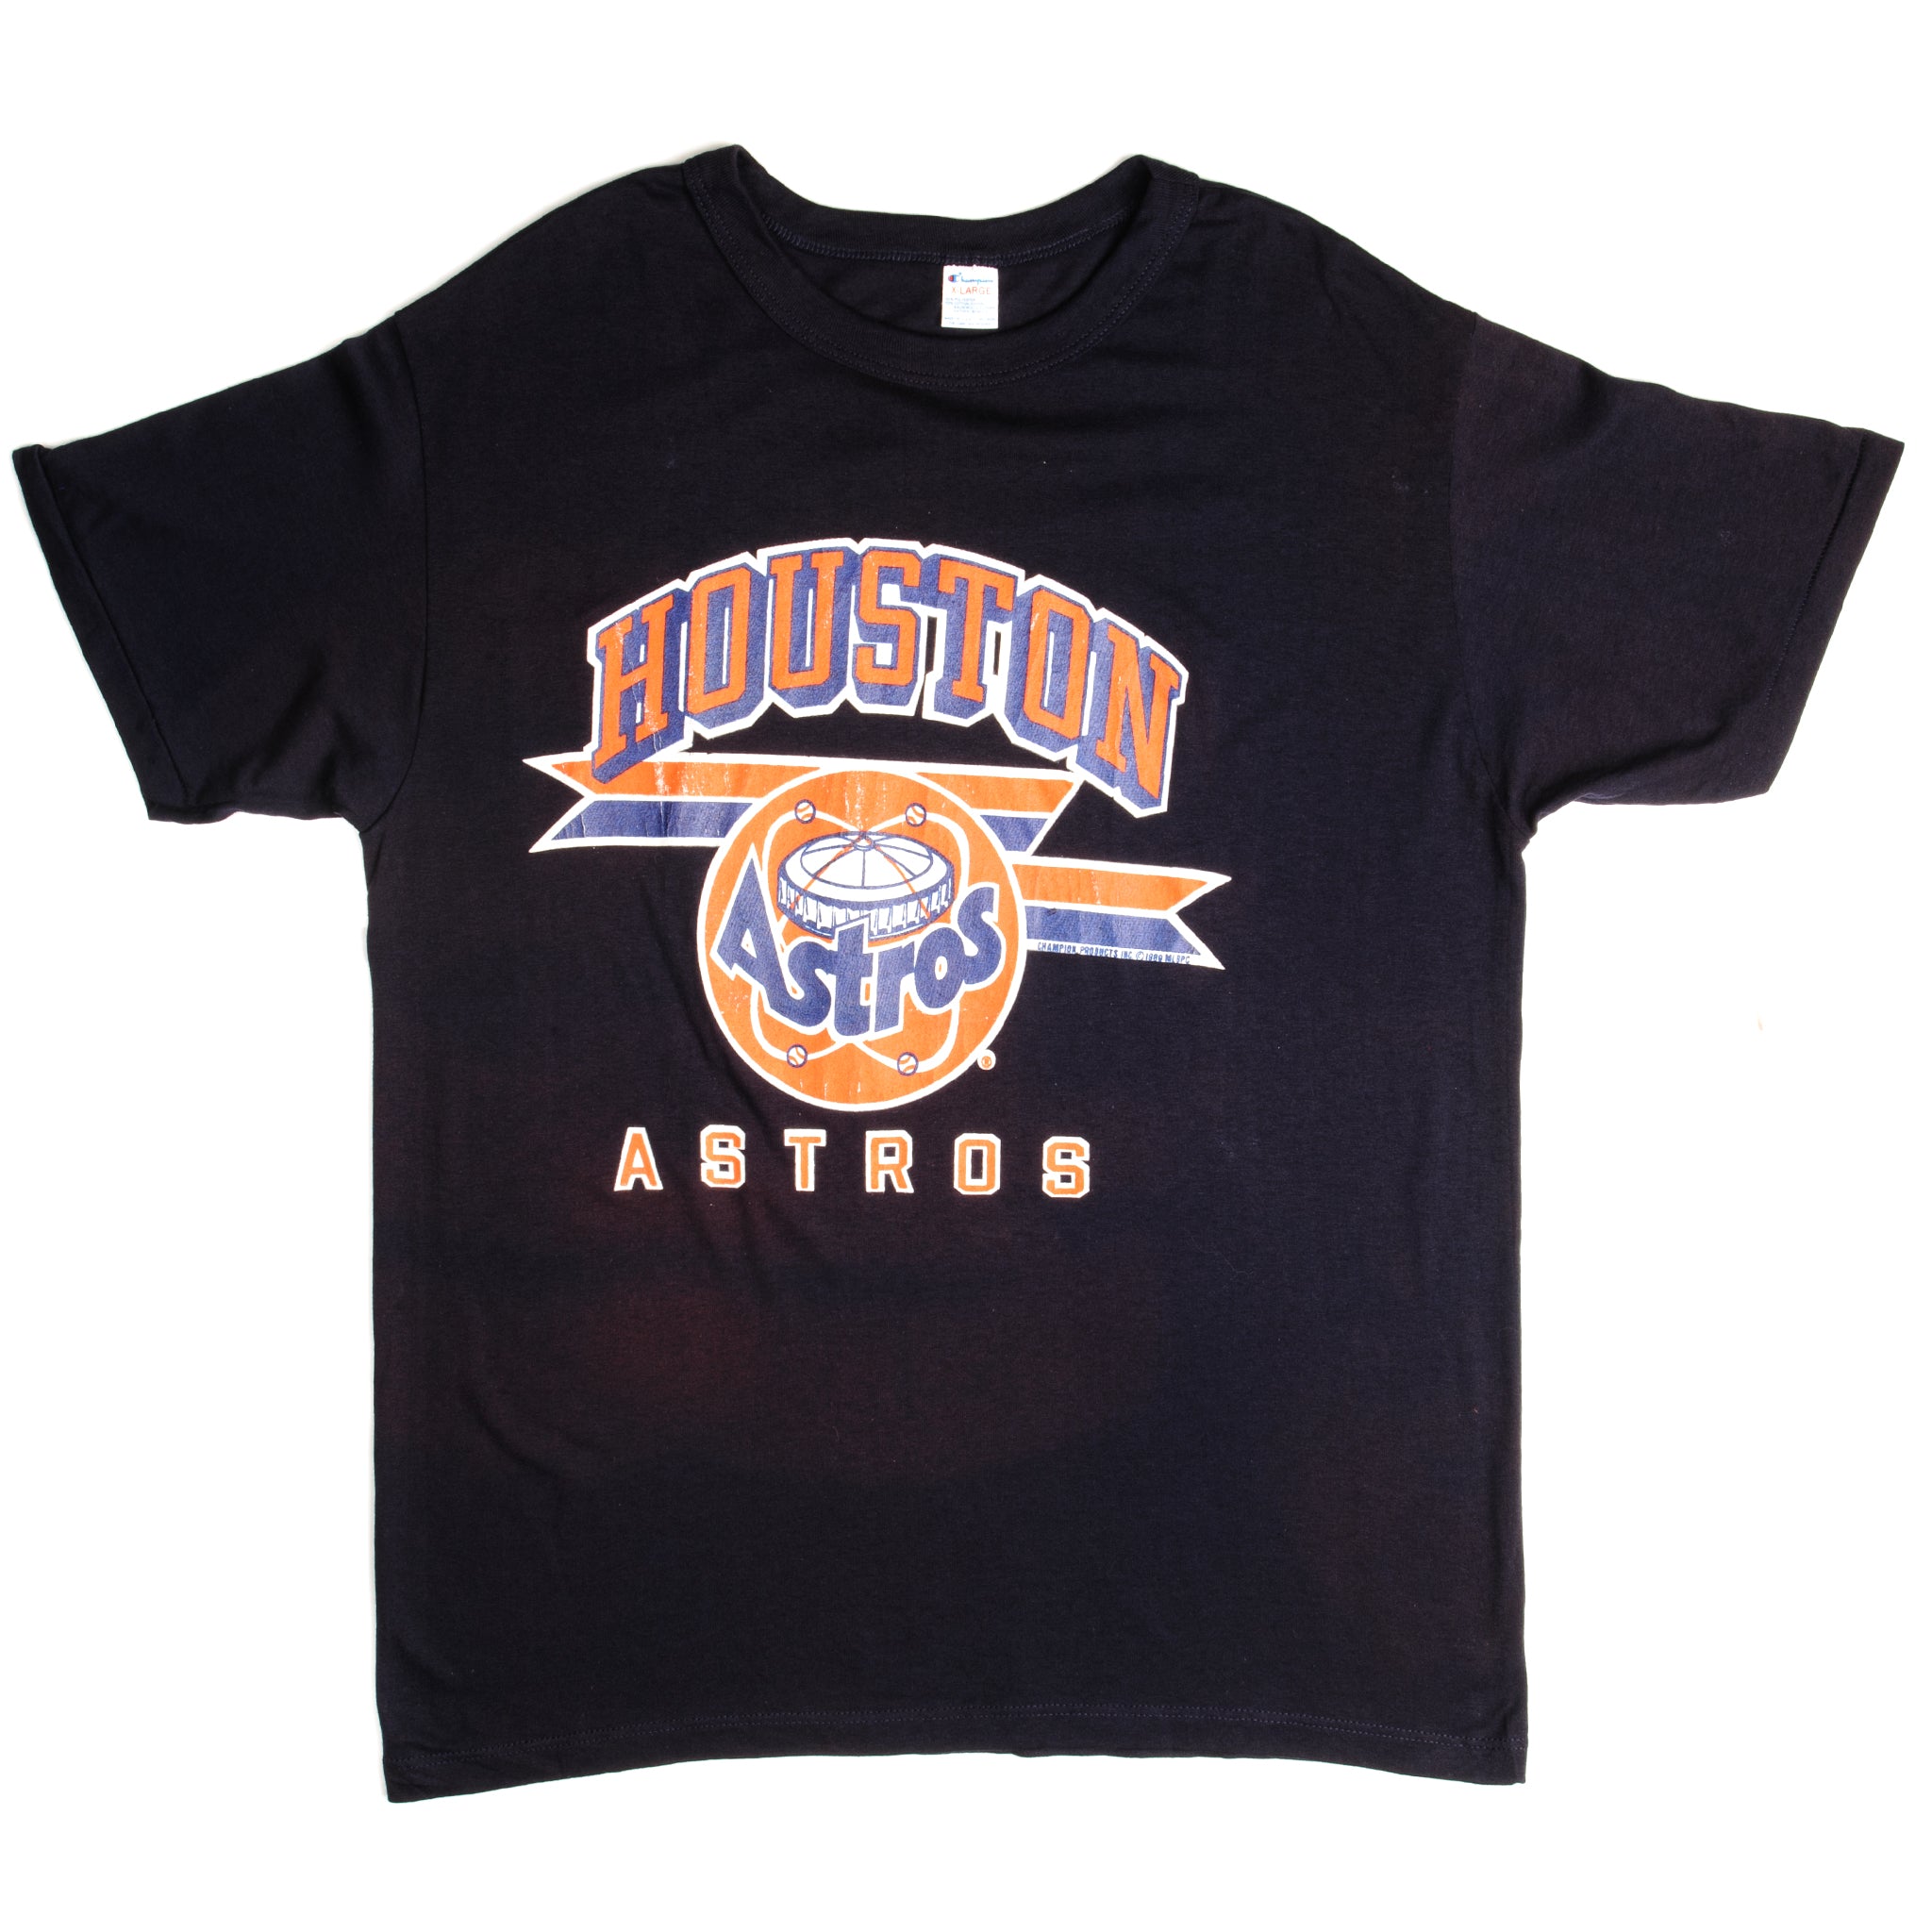 1989 houston astros